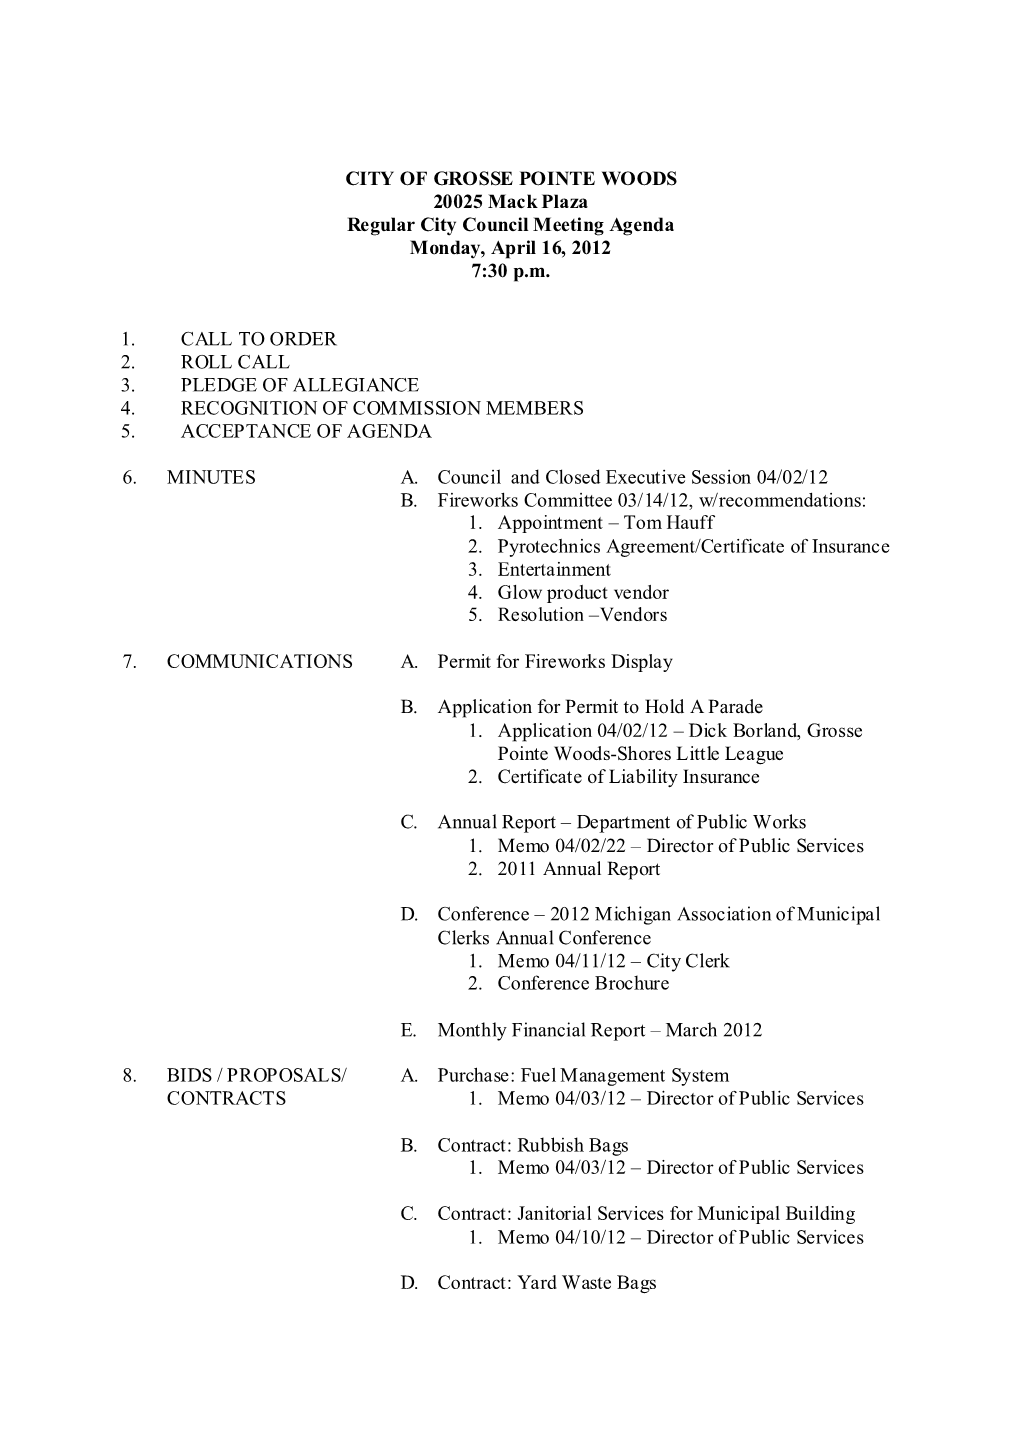 City Council Agenda April 16, 2012